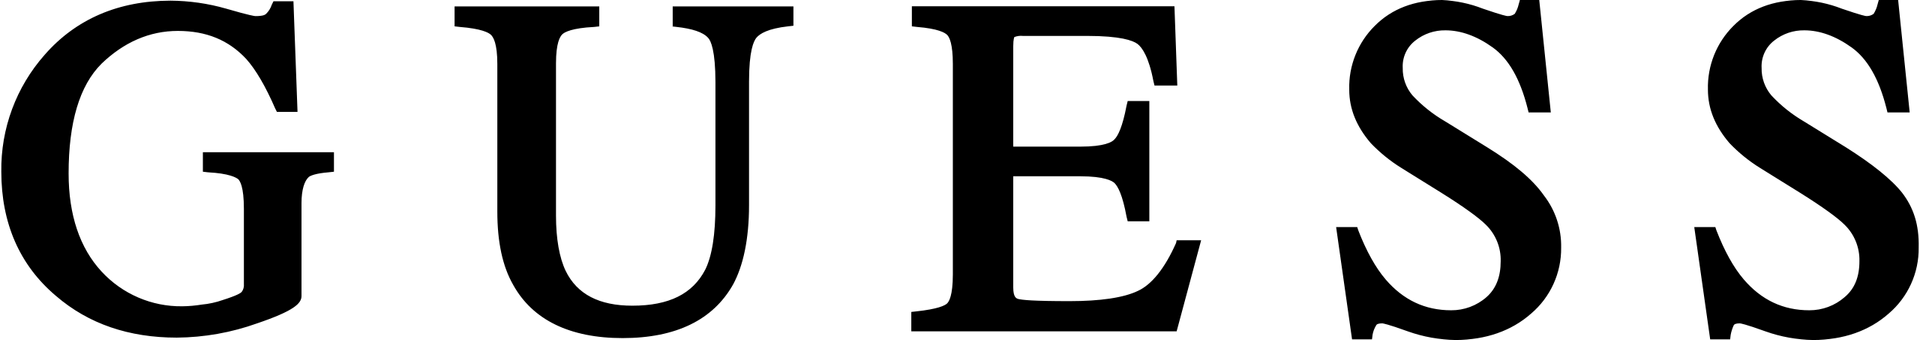 GUESS logo die aktuell Flugblatt